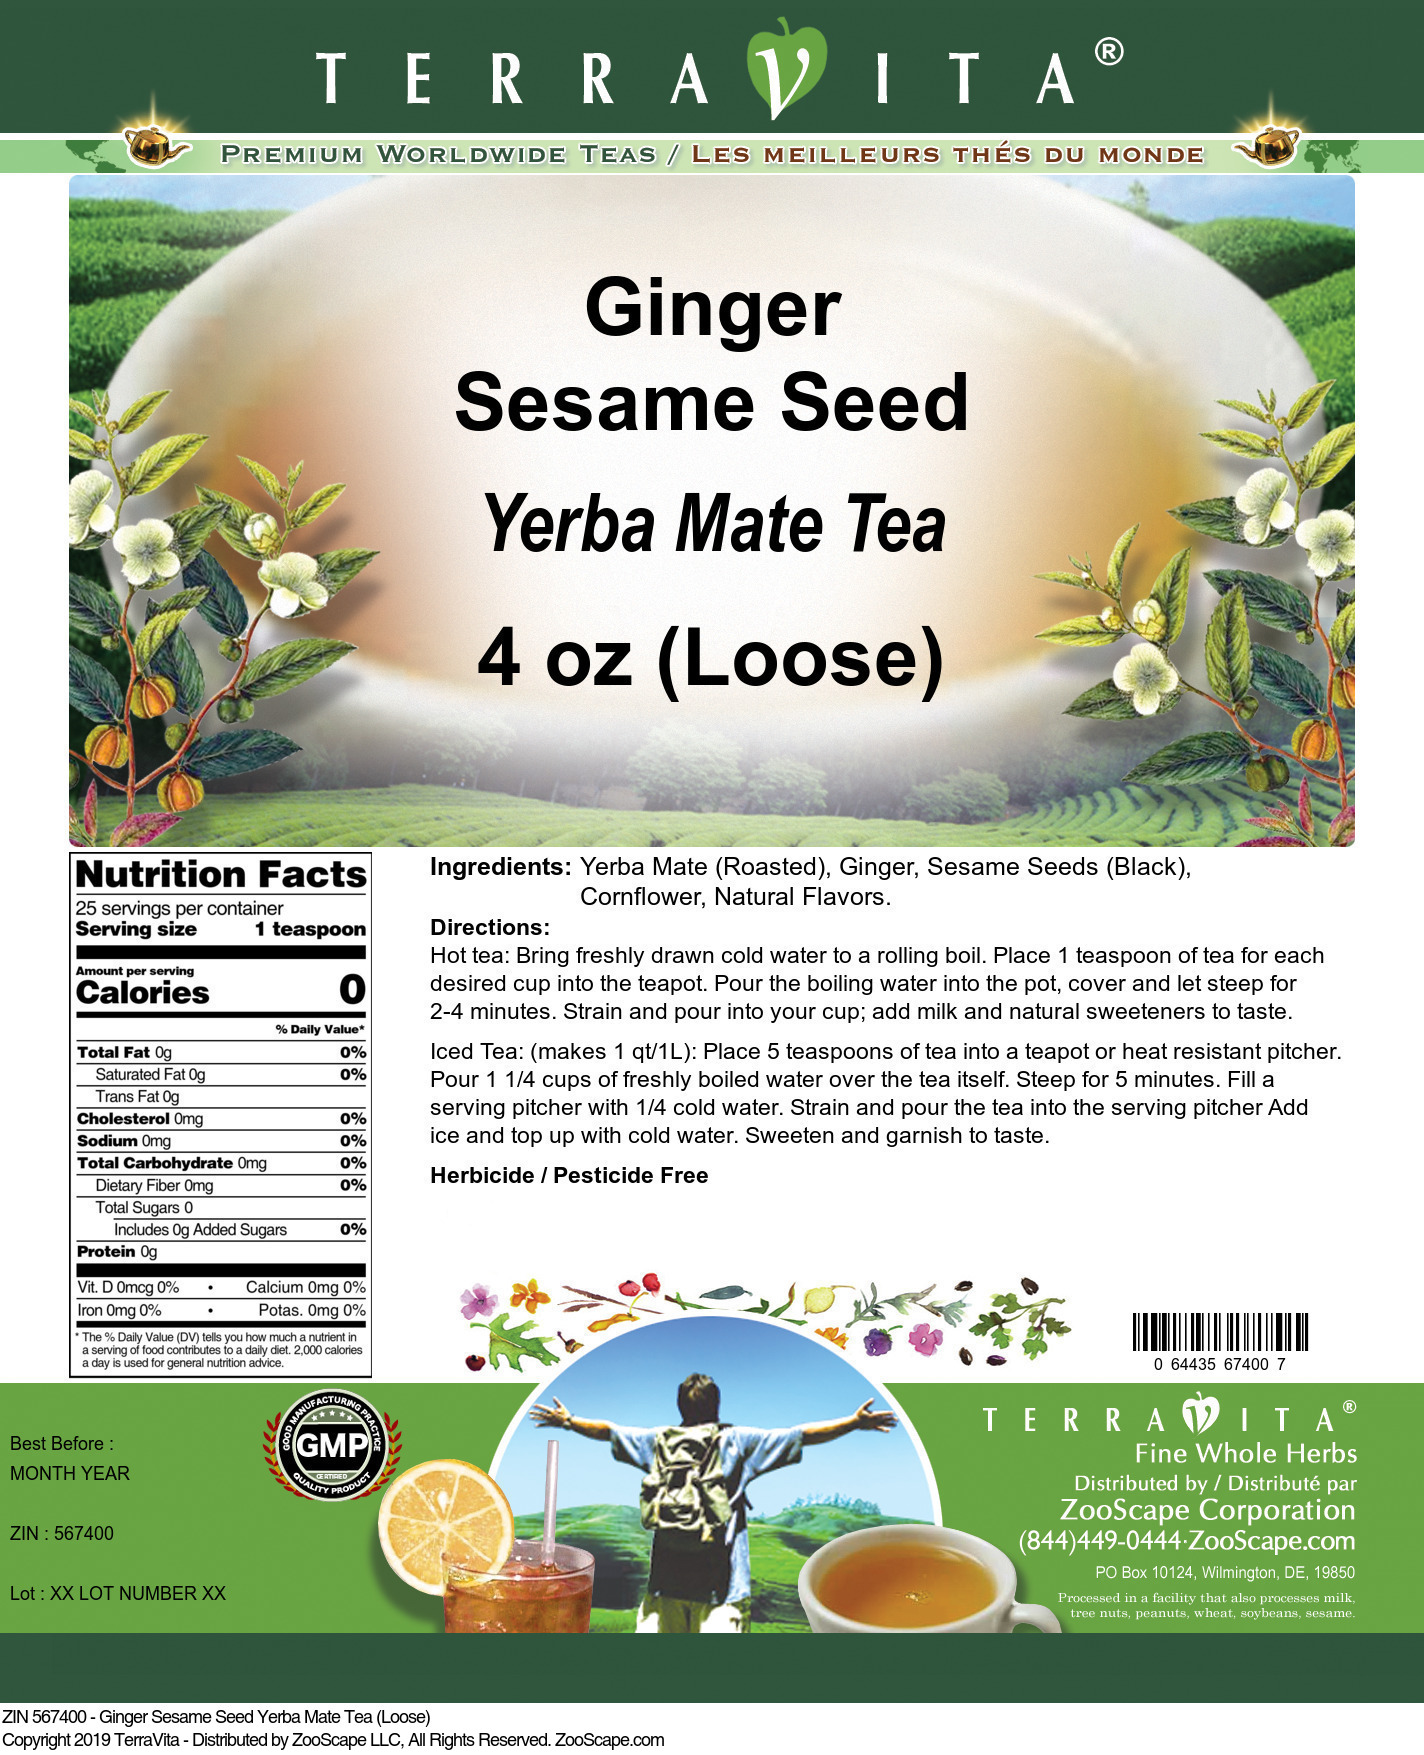 Ginger Sesame Seed Yerba Mate Tea (Loose) - Label